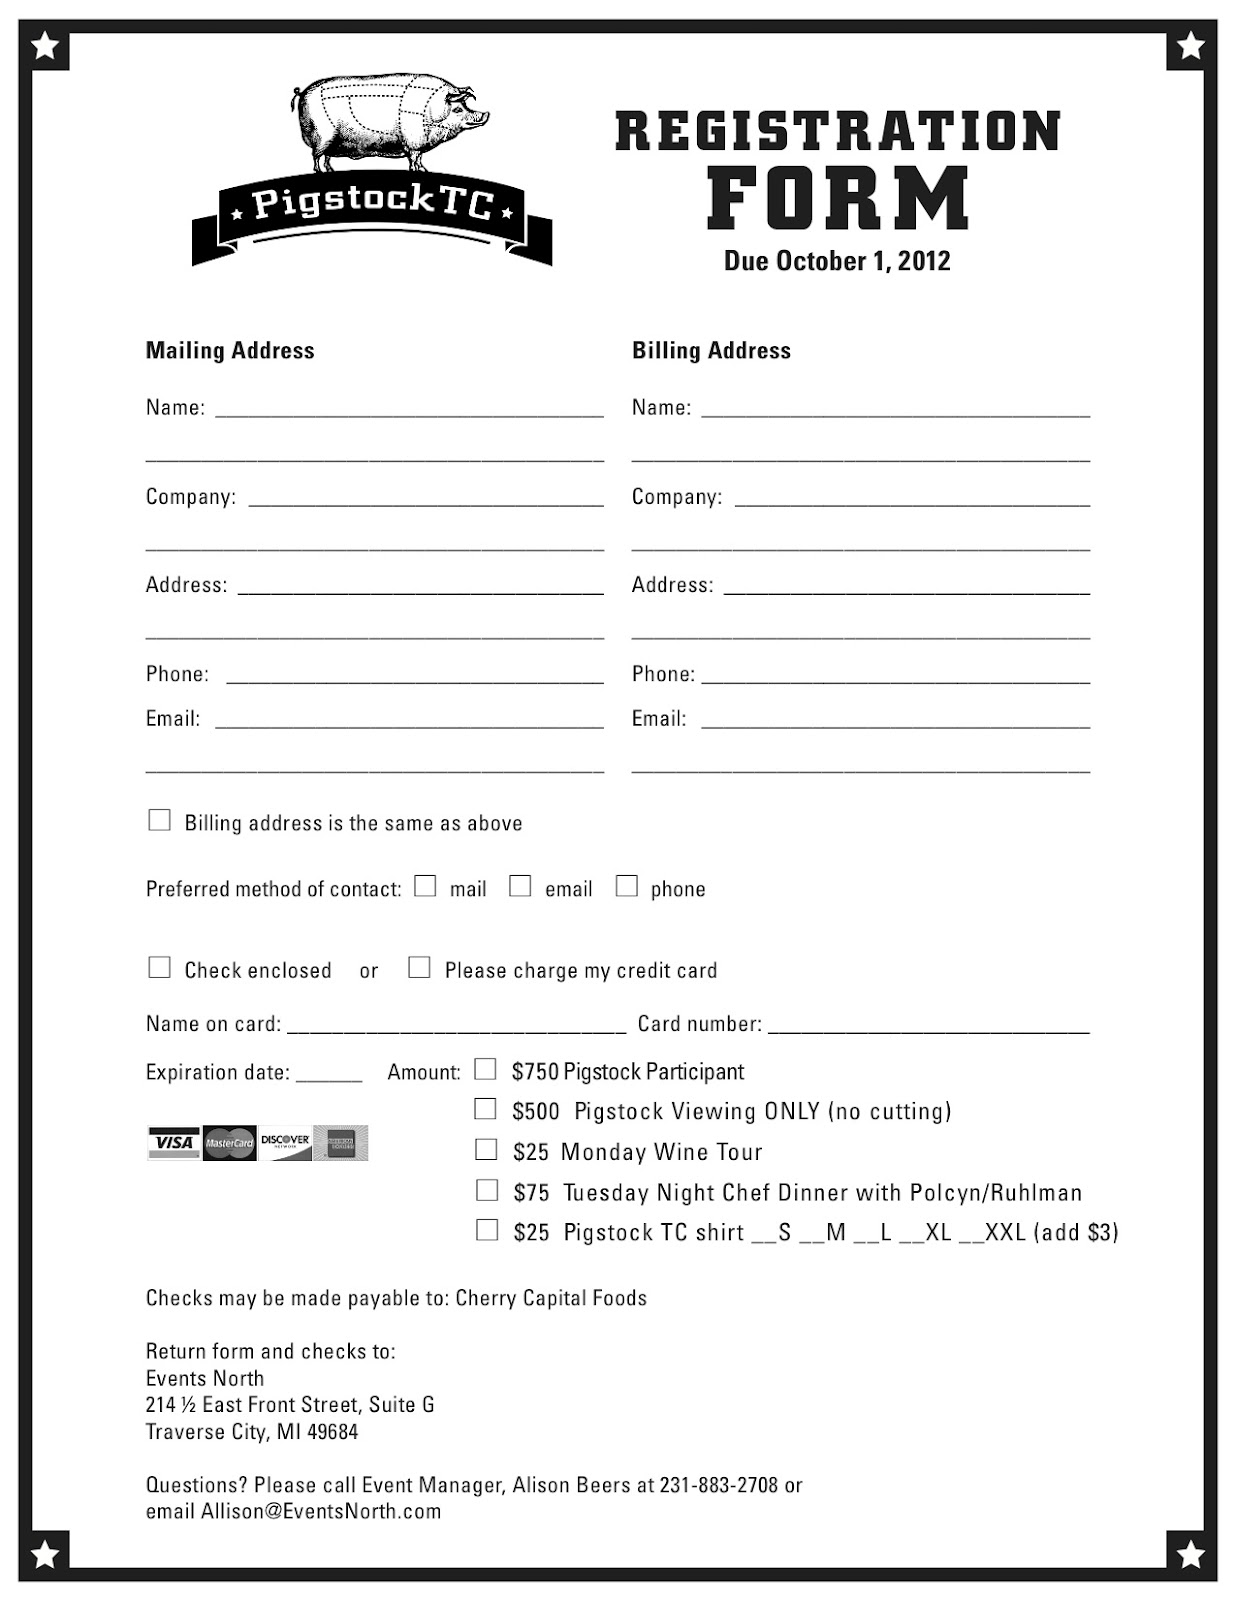 registration form template free download patient registration form 